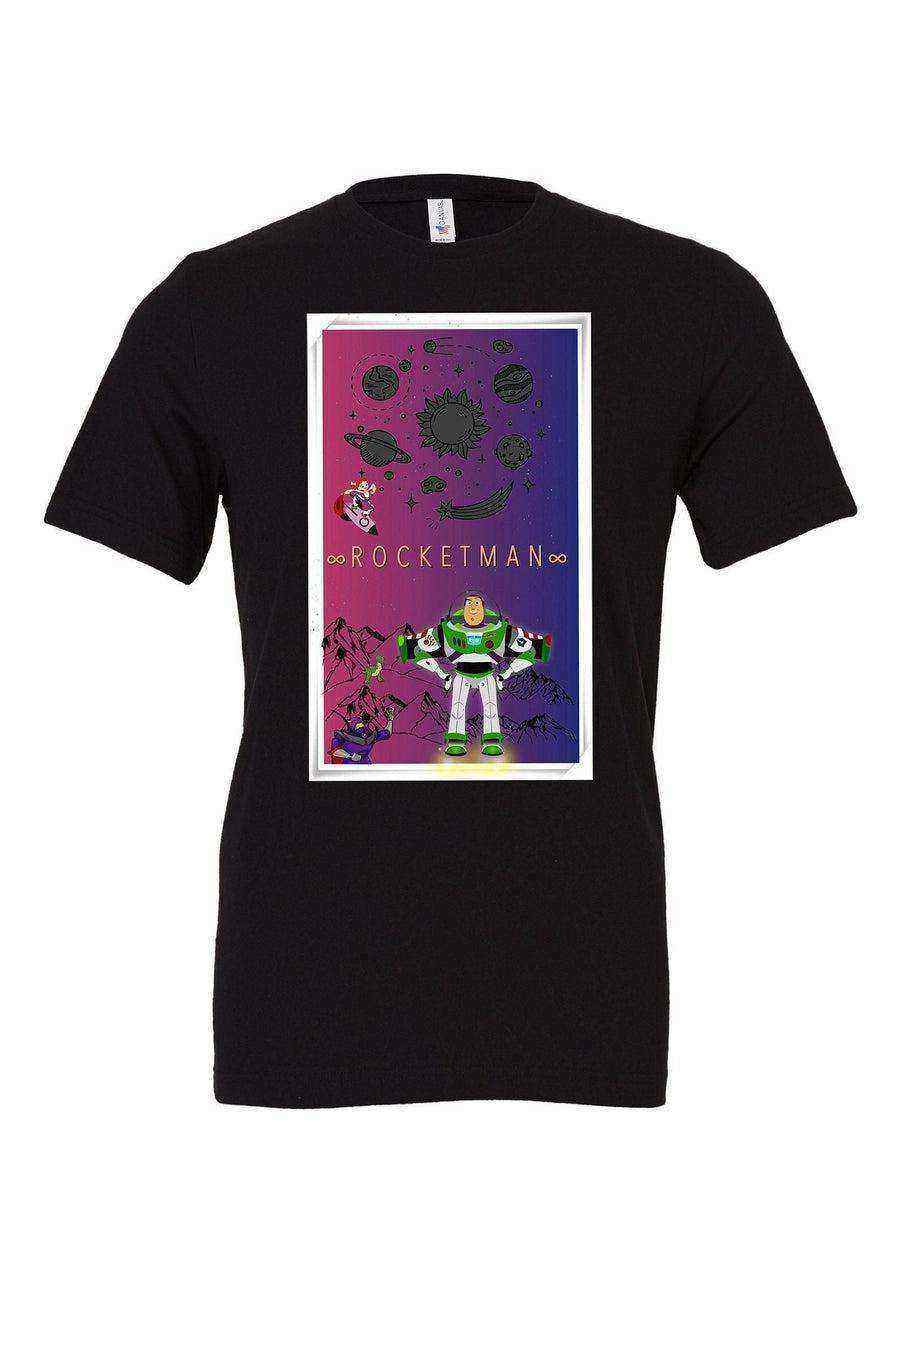 Toddler | Buzz Rocketman Shirt | Buzz Lightyear Shirt | Music Mashup Tee - Dylan's Tees